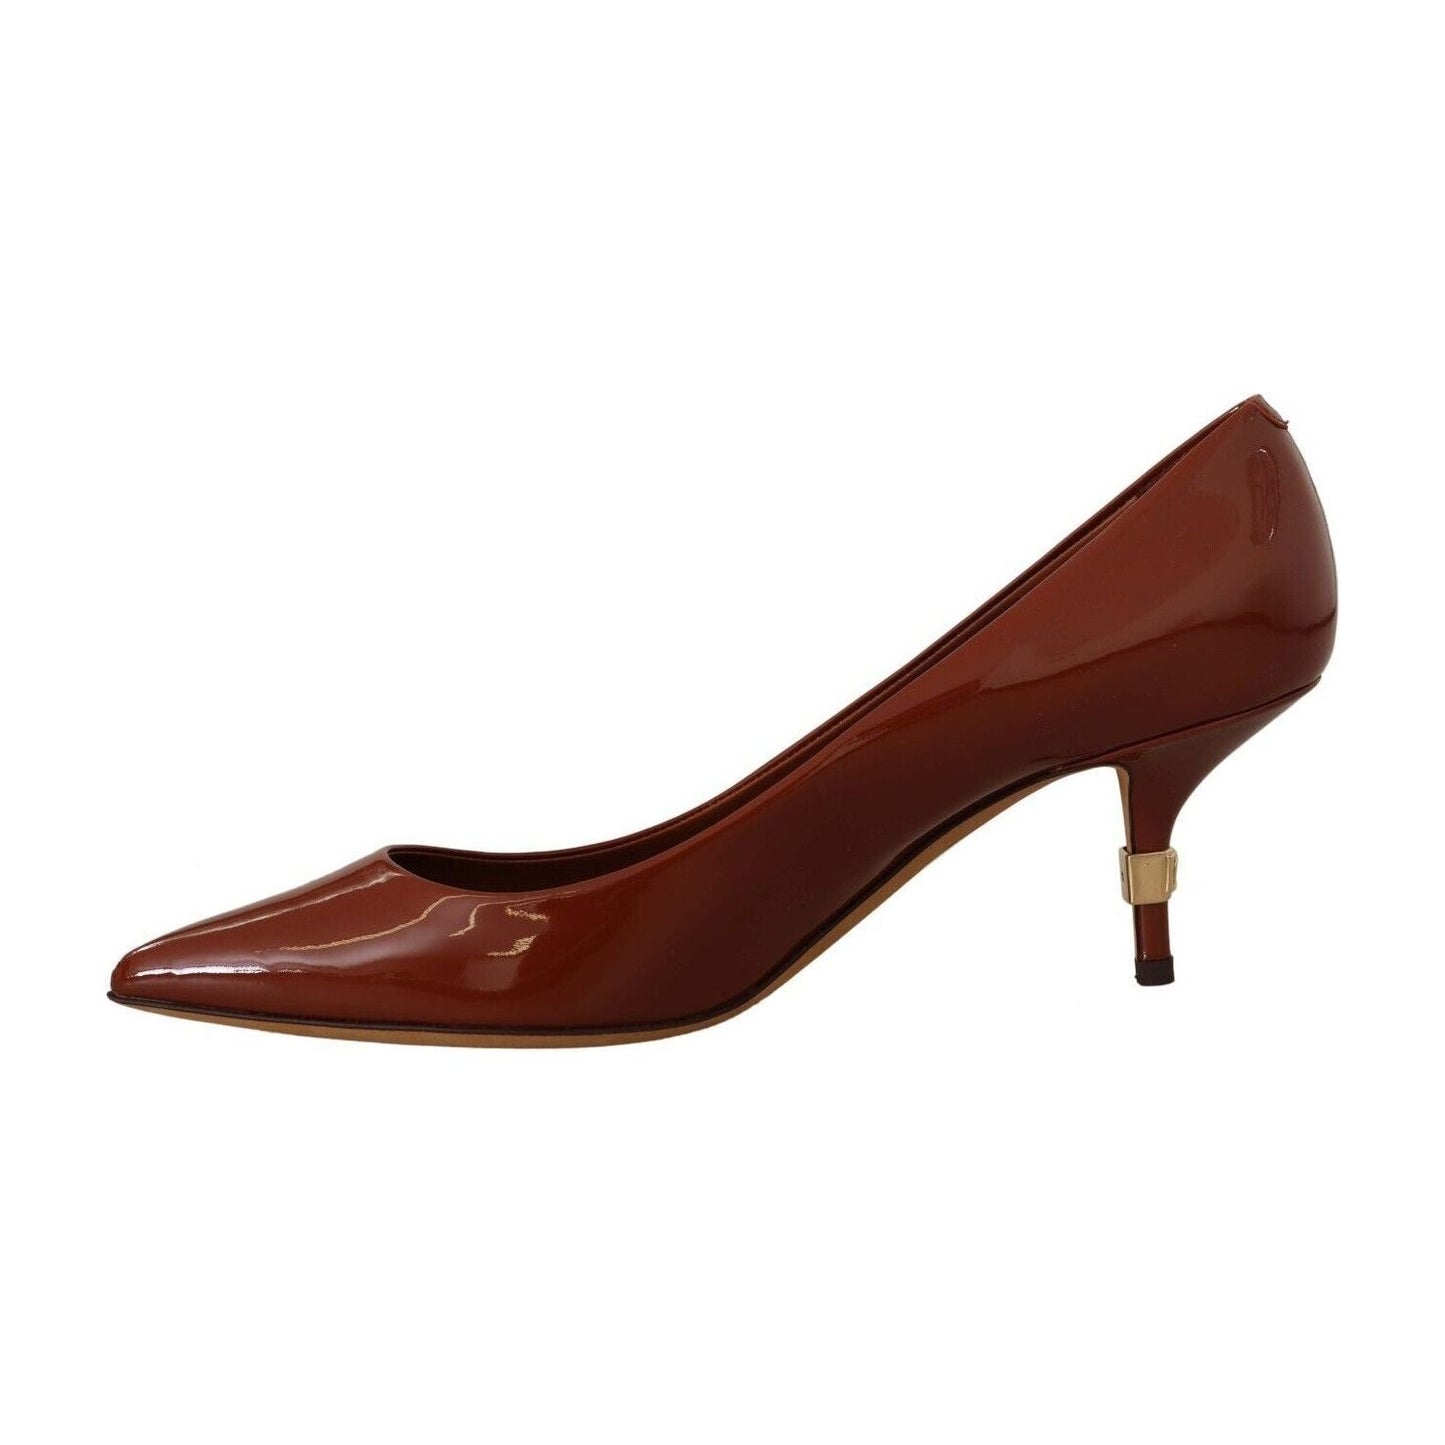 Dolce & Gabbana Elegant Patent Leather Heels Pumps brown-kitten-heels-pumps-patent-leather-shoes s-l1600-4-27-98a2942a-aee.jpg